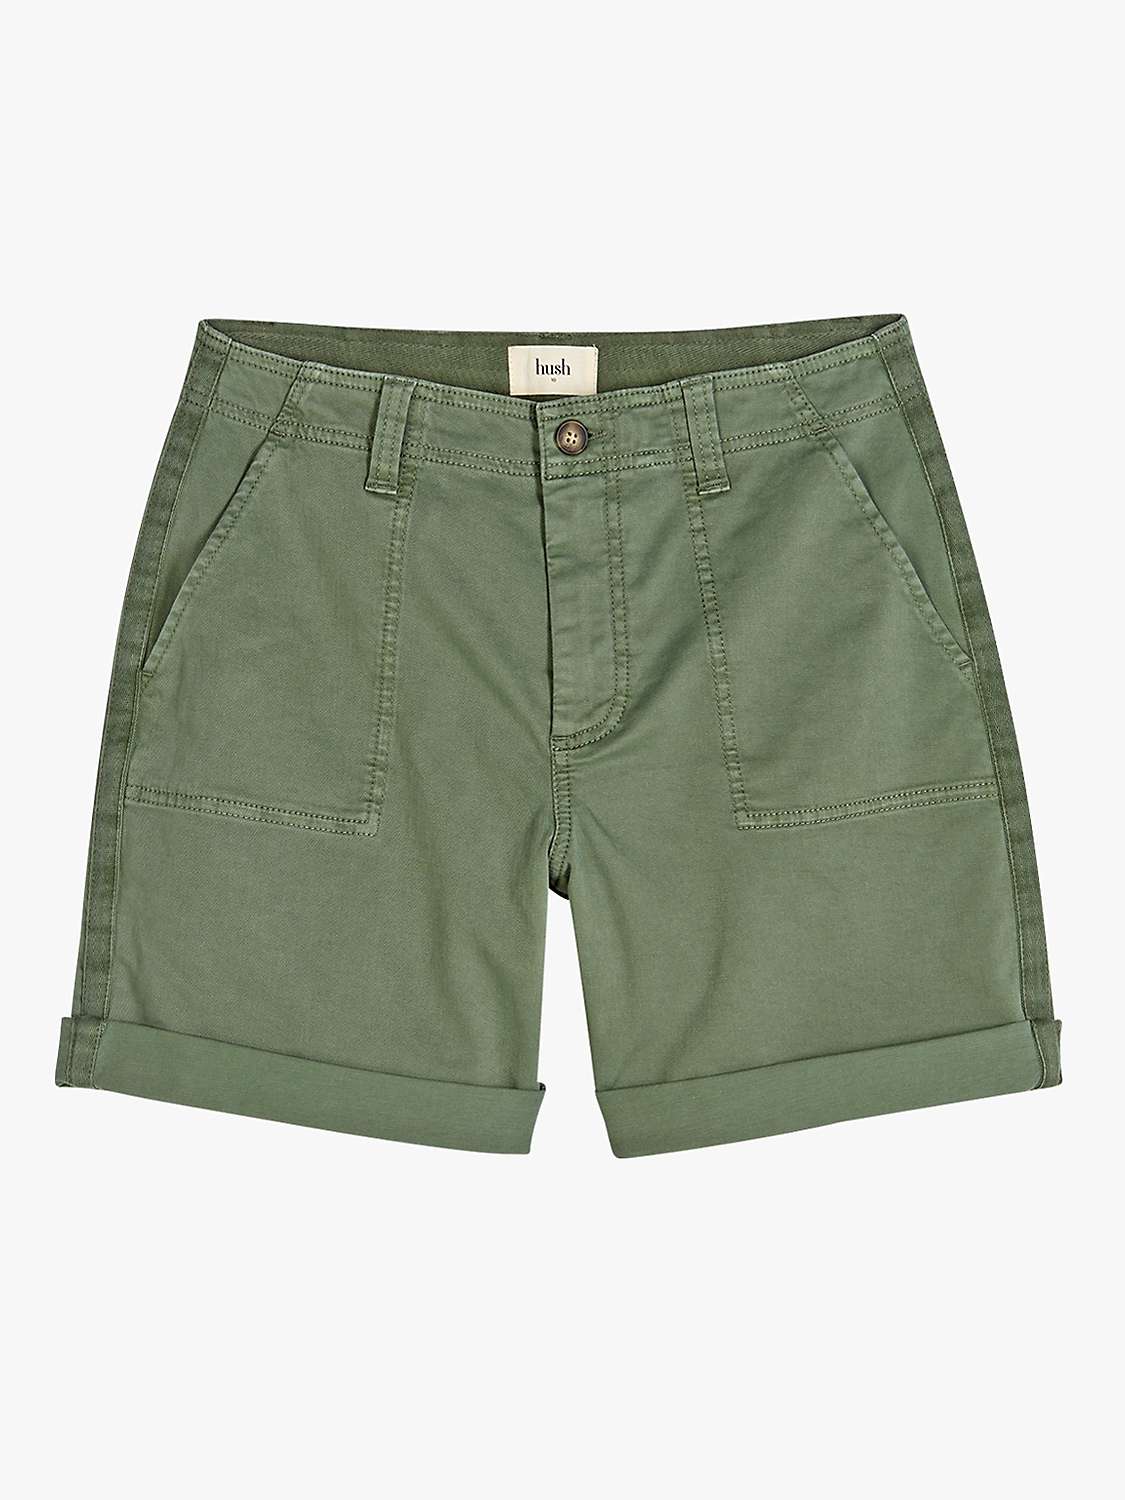 Buy HUSH Long Chino Shorts Online at johnlewis.com